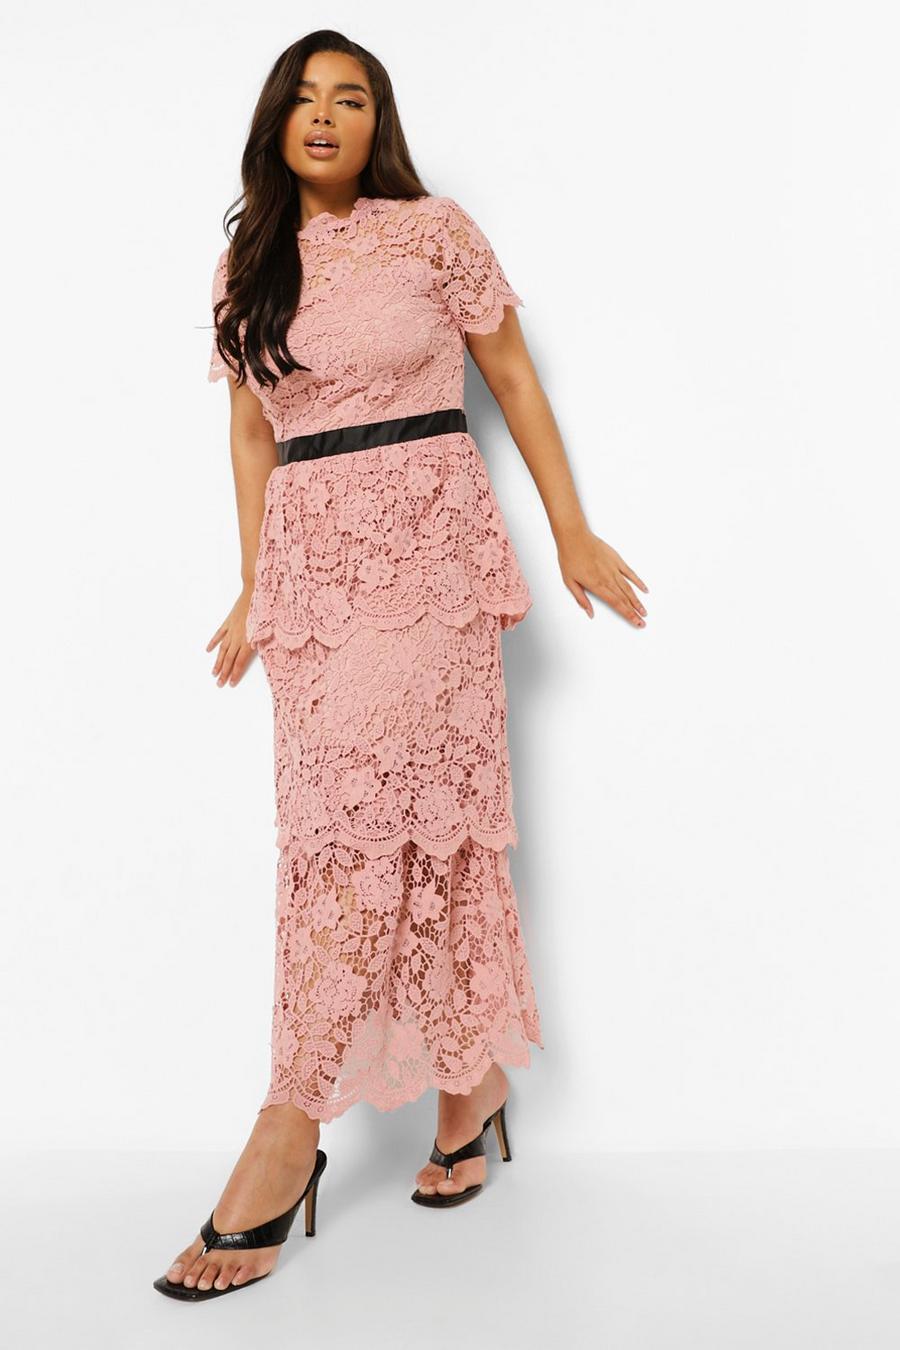 Plus gestuftes Spitzen-Kleid, Blassrosa pink